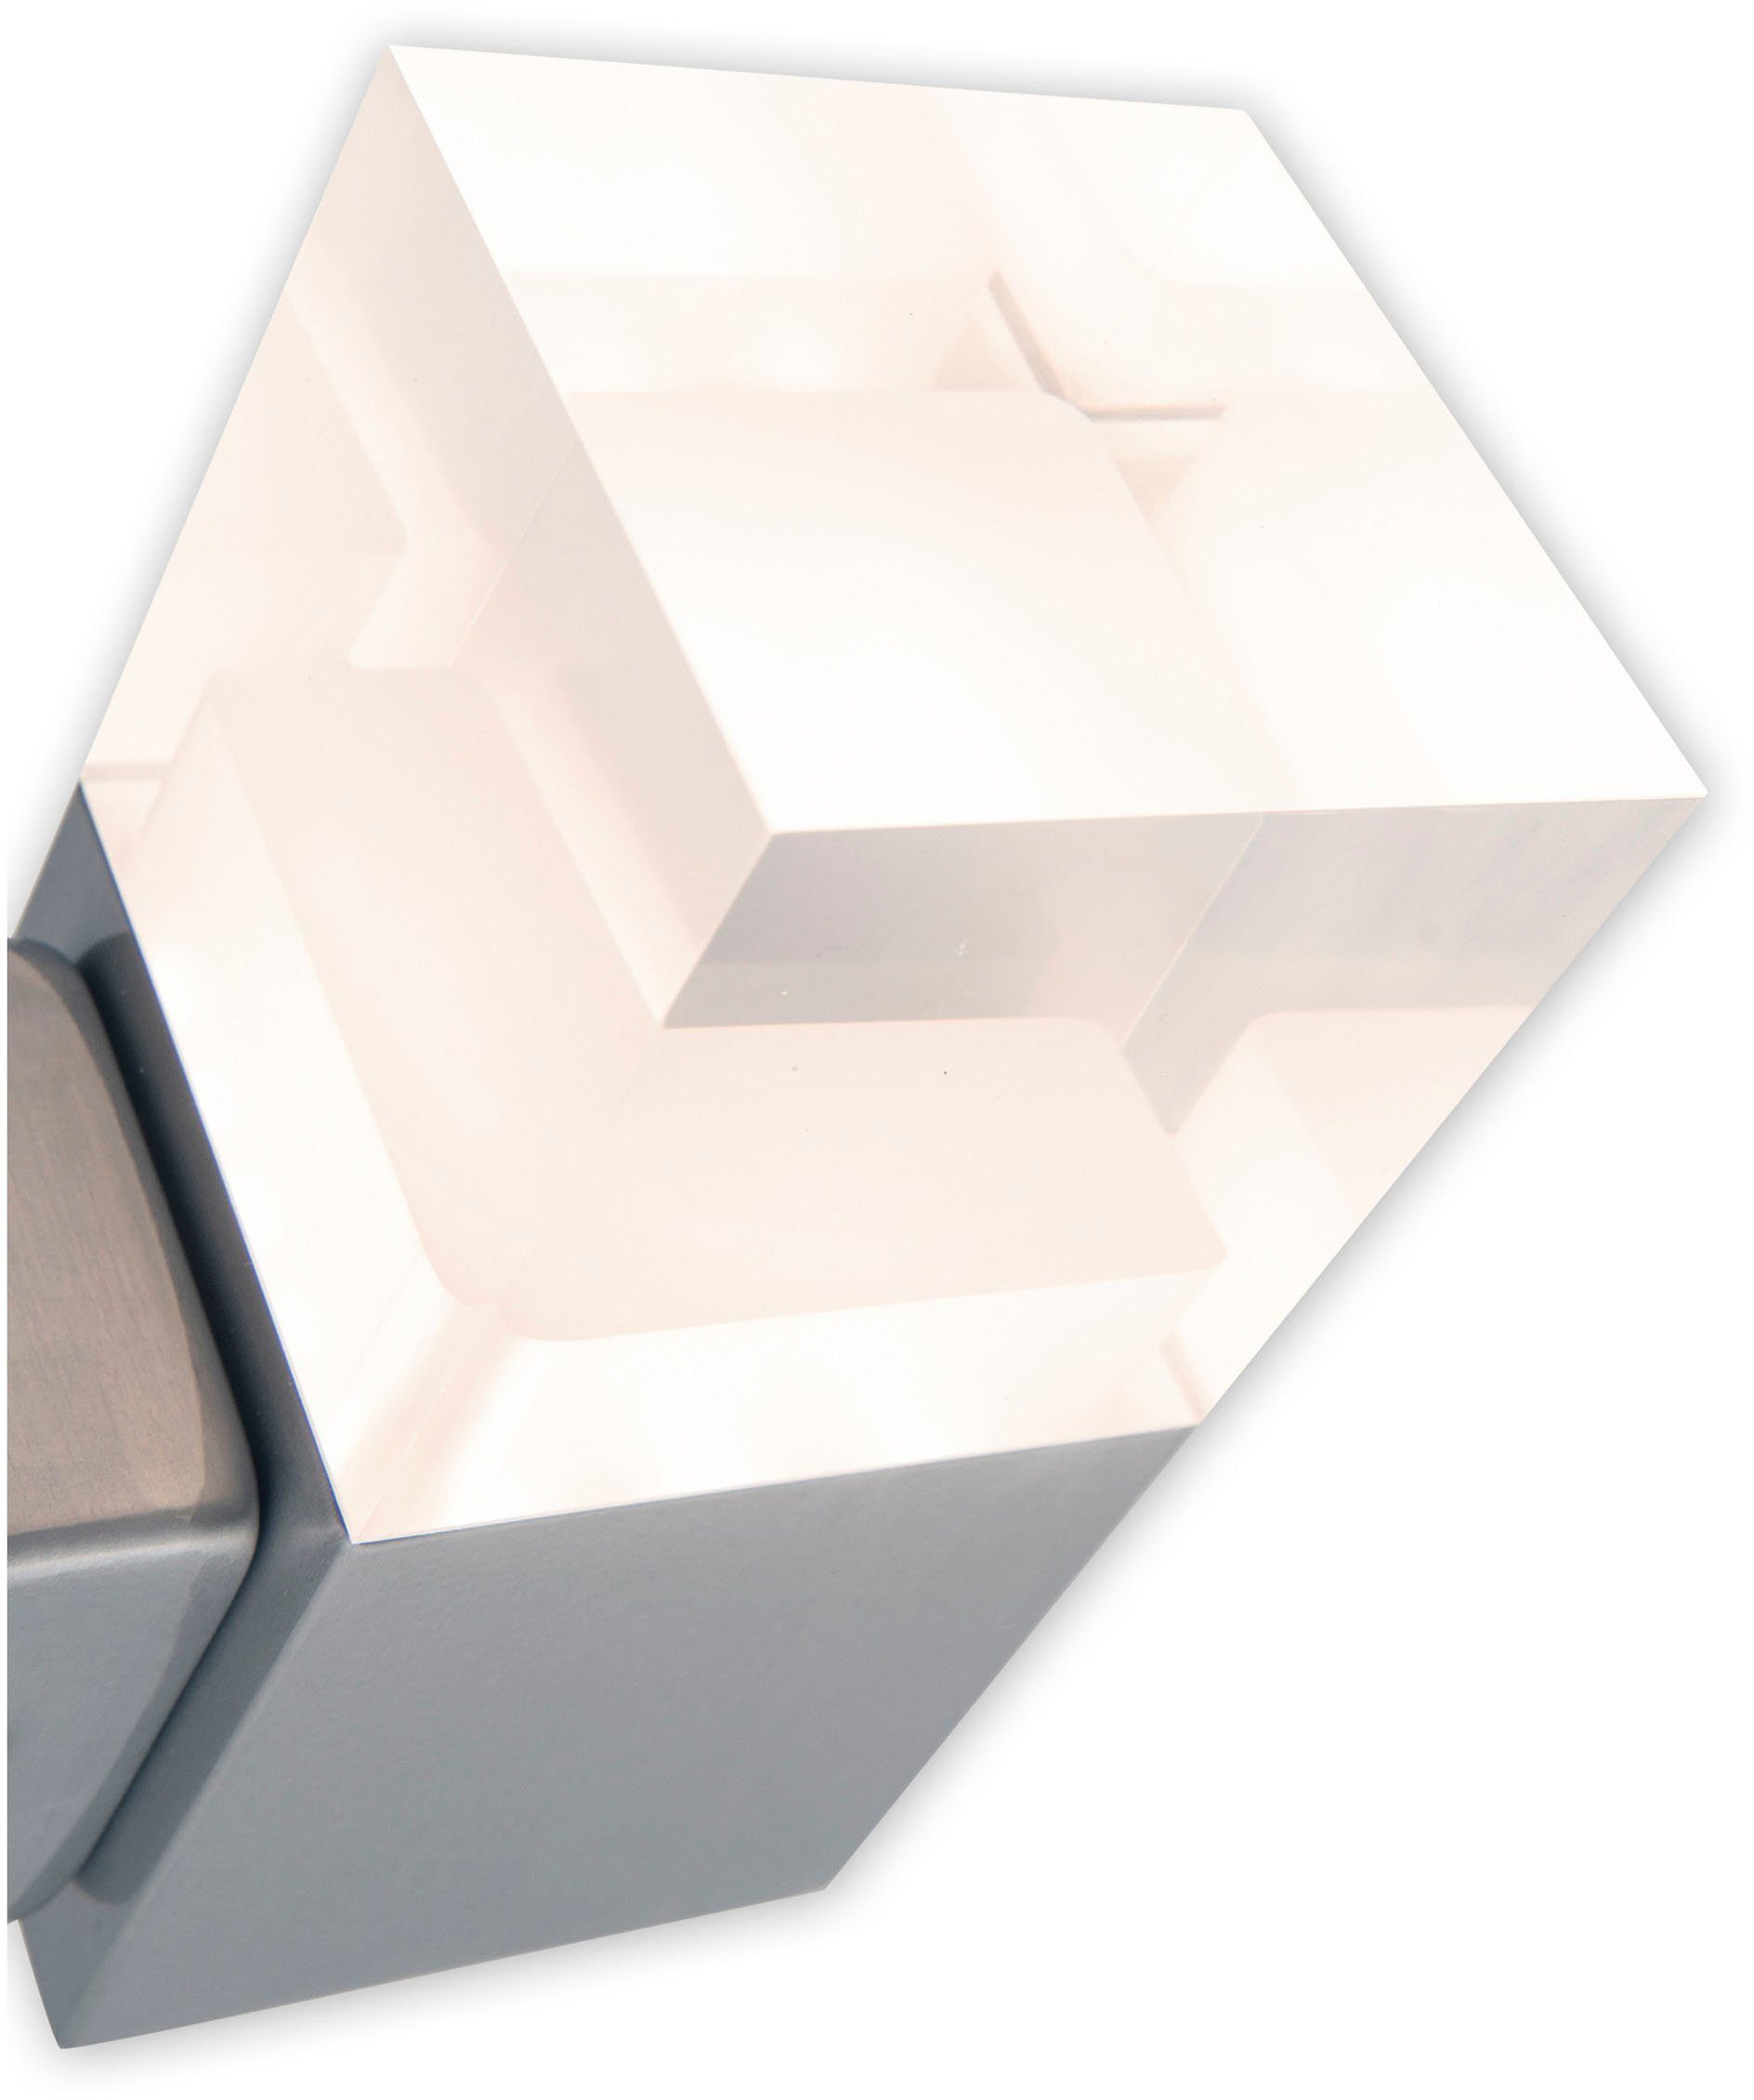 15x Außen-Wandleuchte LED Edelstahl/Kunststoff blank/opal näve Warmweiß, in metall LED Leah, warmweiß incl. IP44